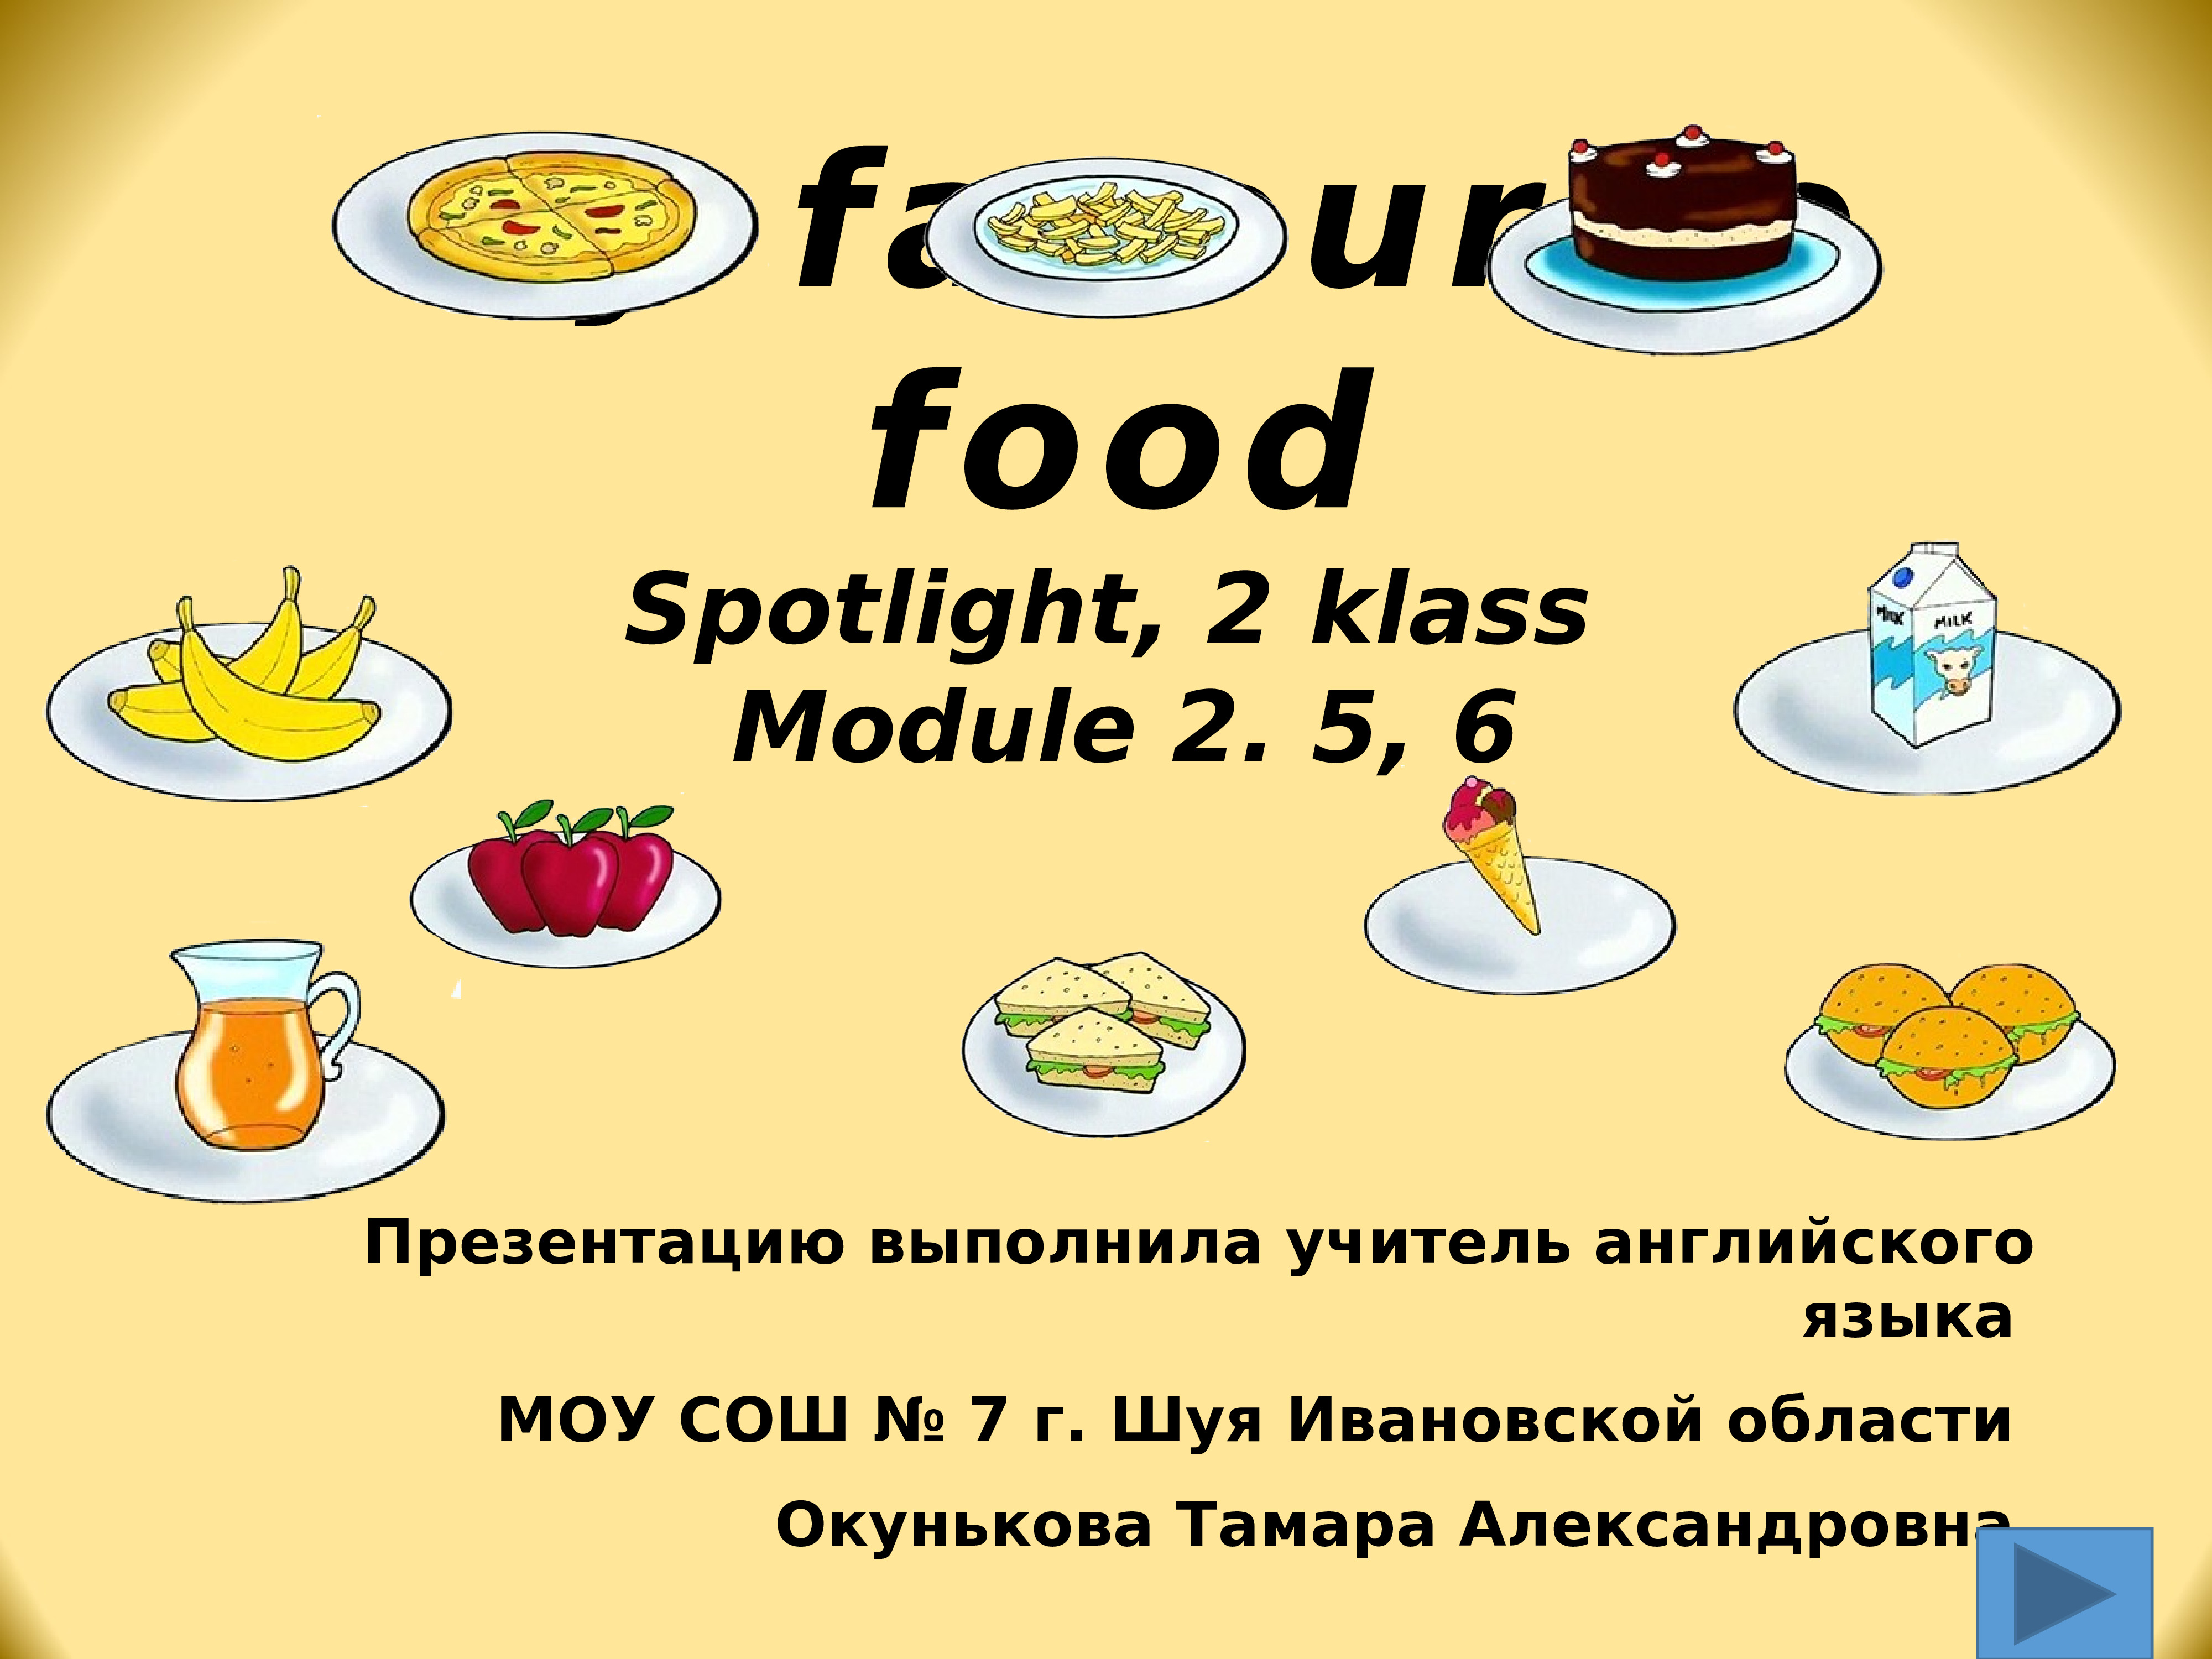 My favourite food Spotlight, 2 klass Module 2. 5, 6 Cлайд № 1.